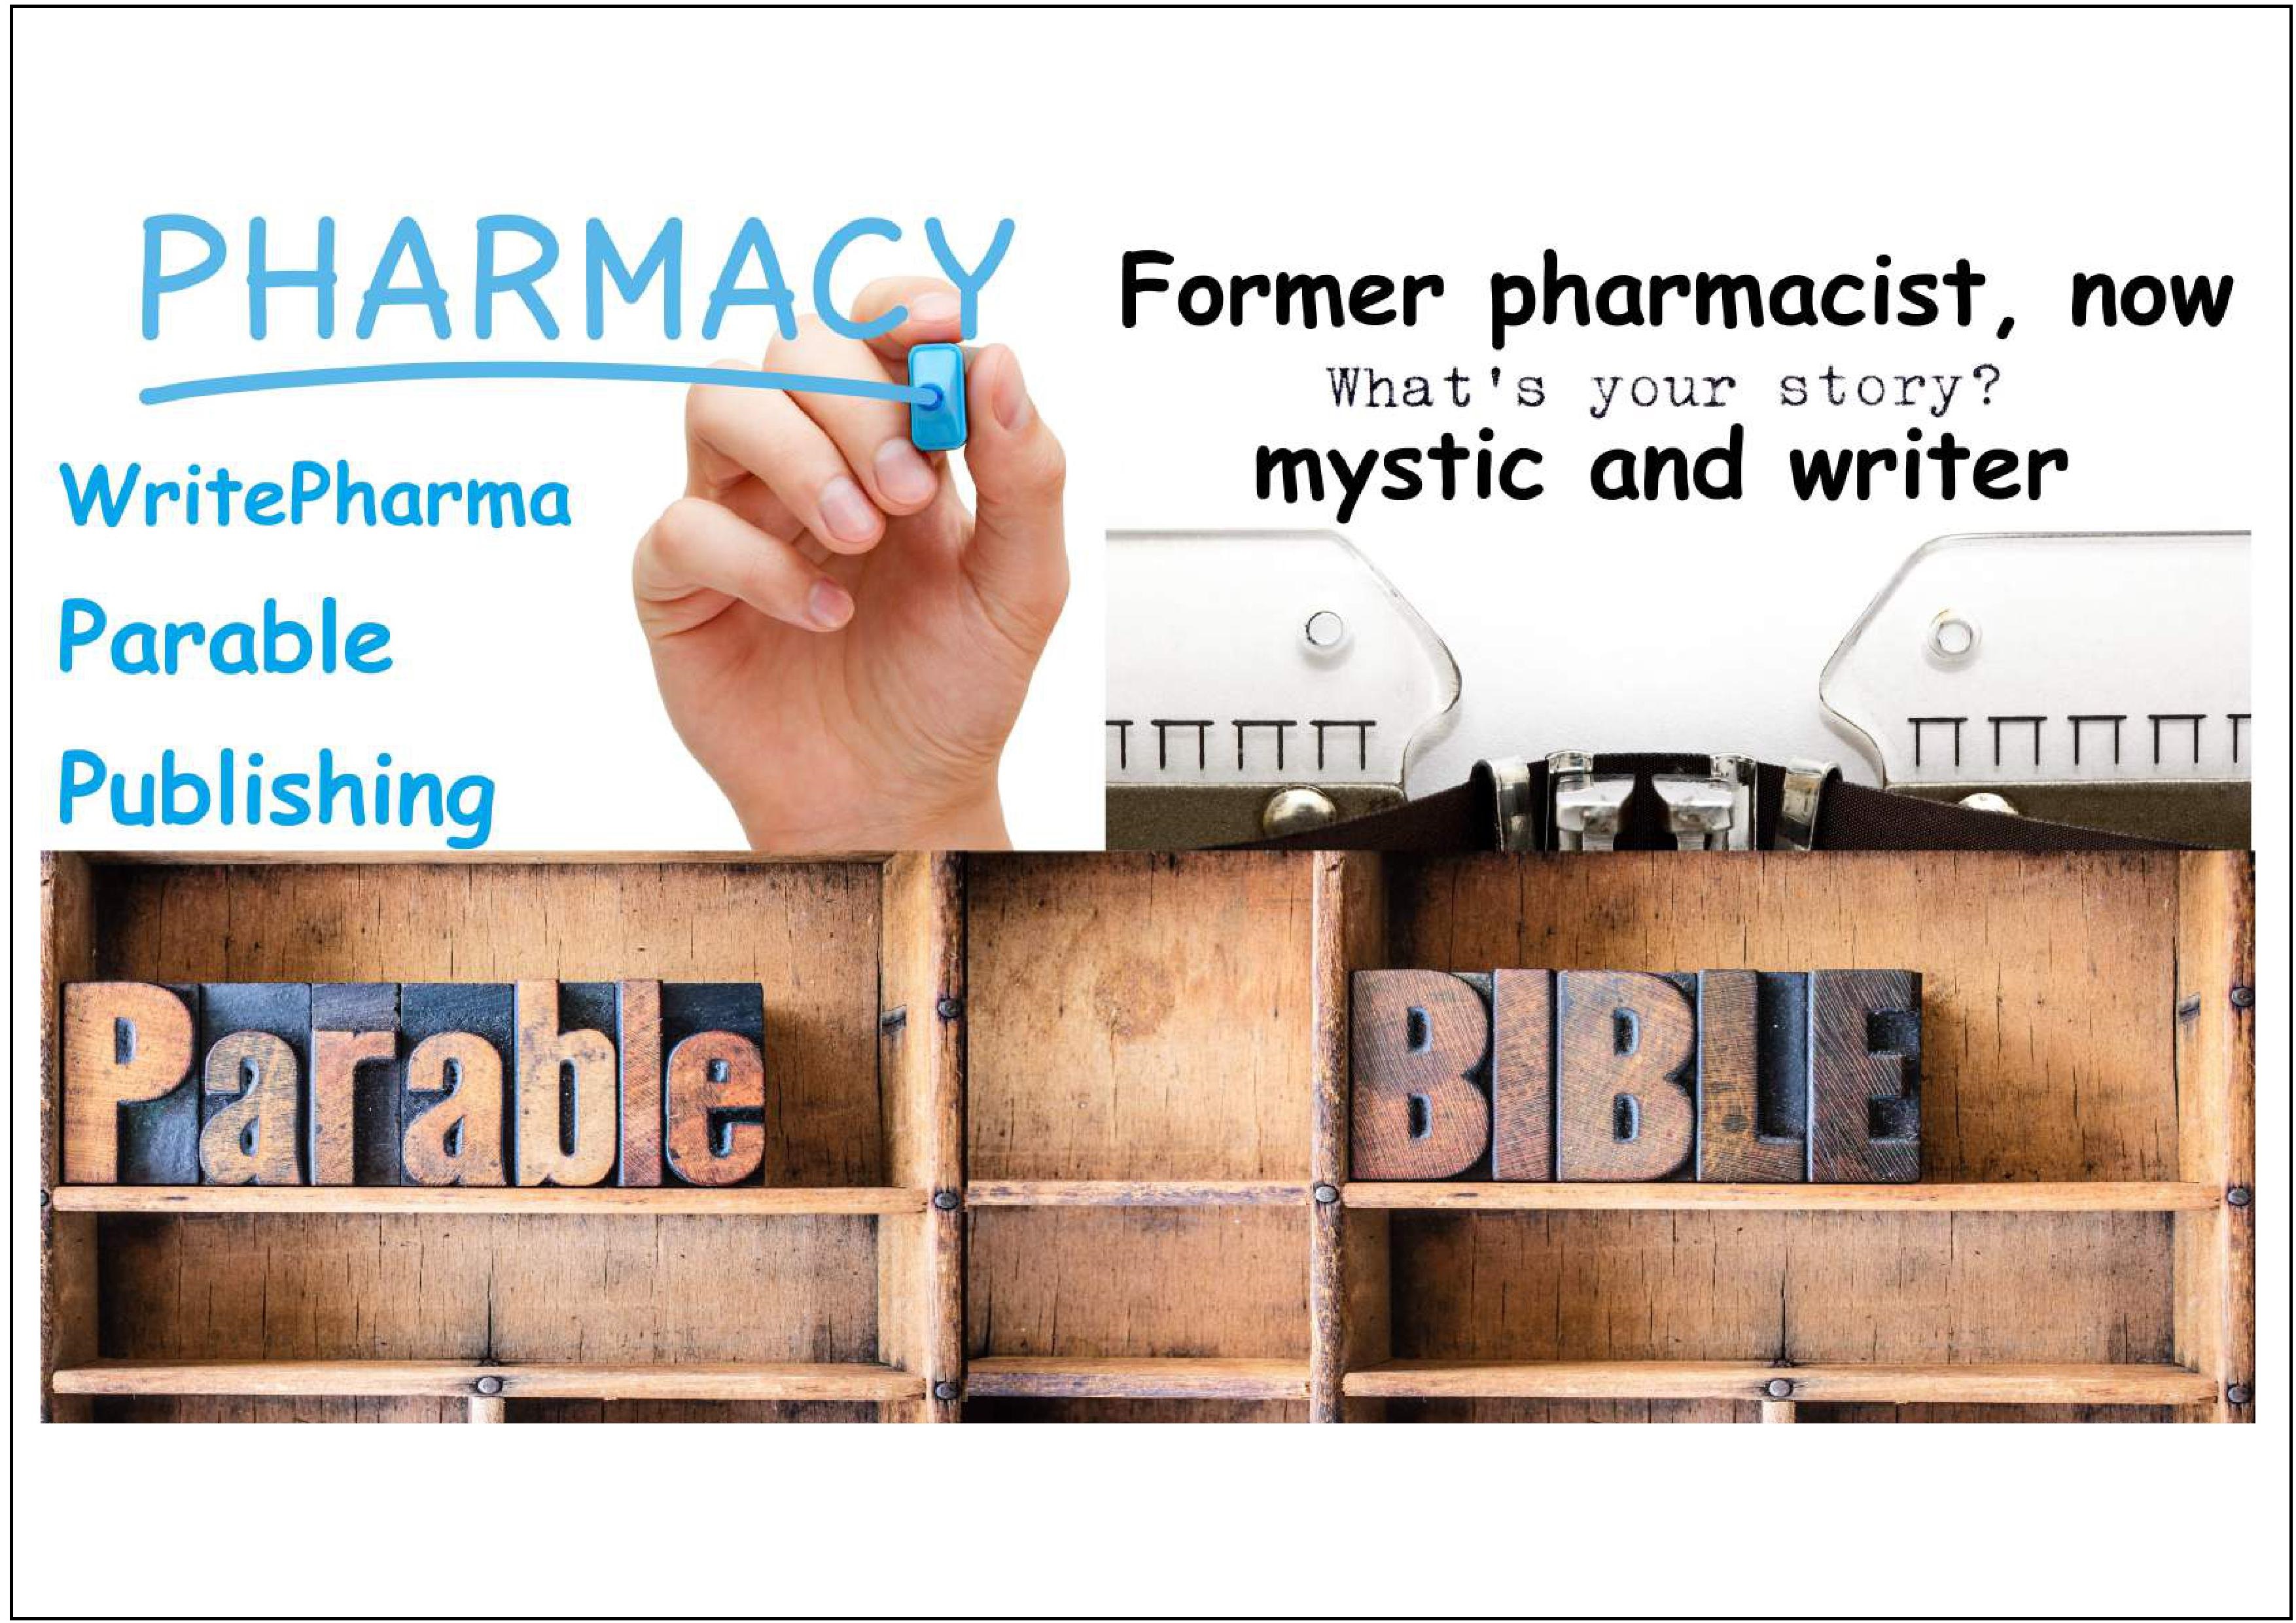 Write pharma logo as personal logo of website creator